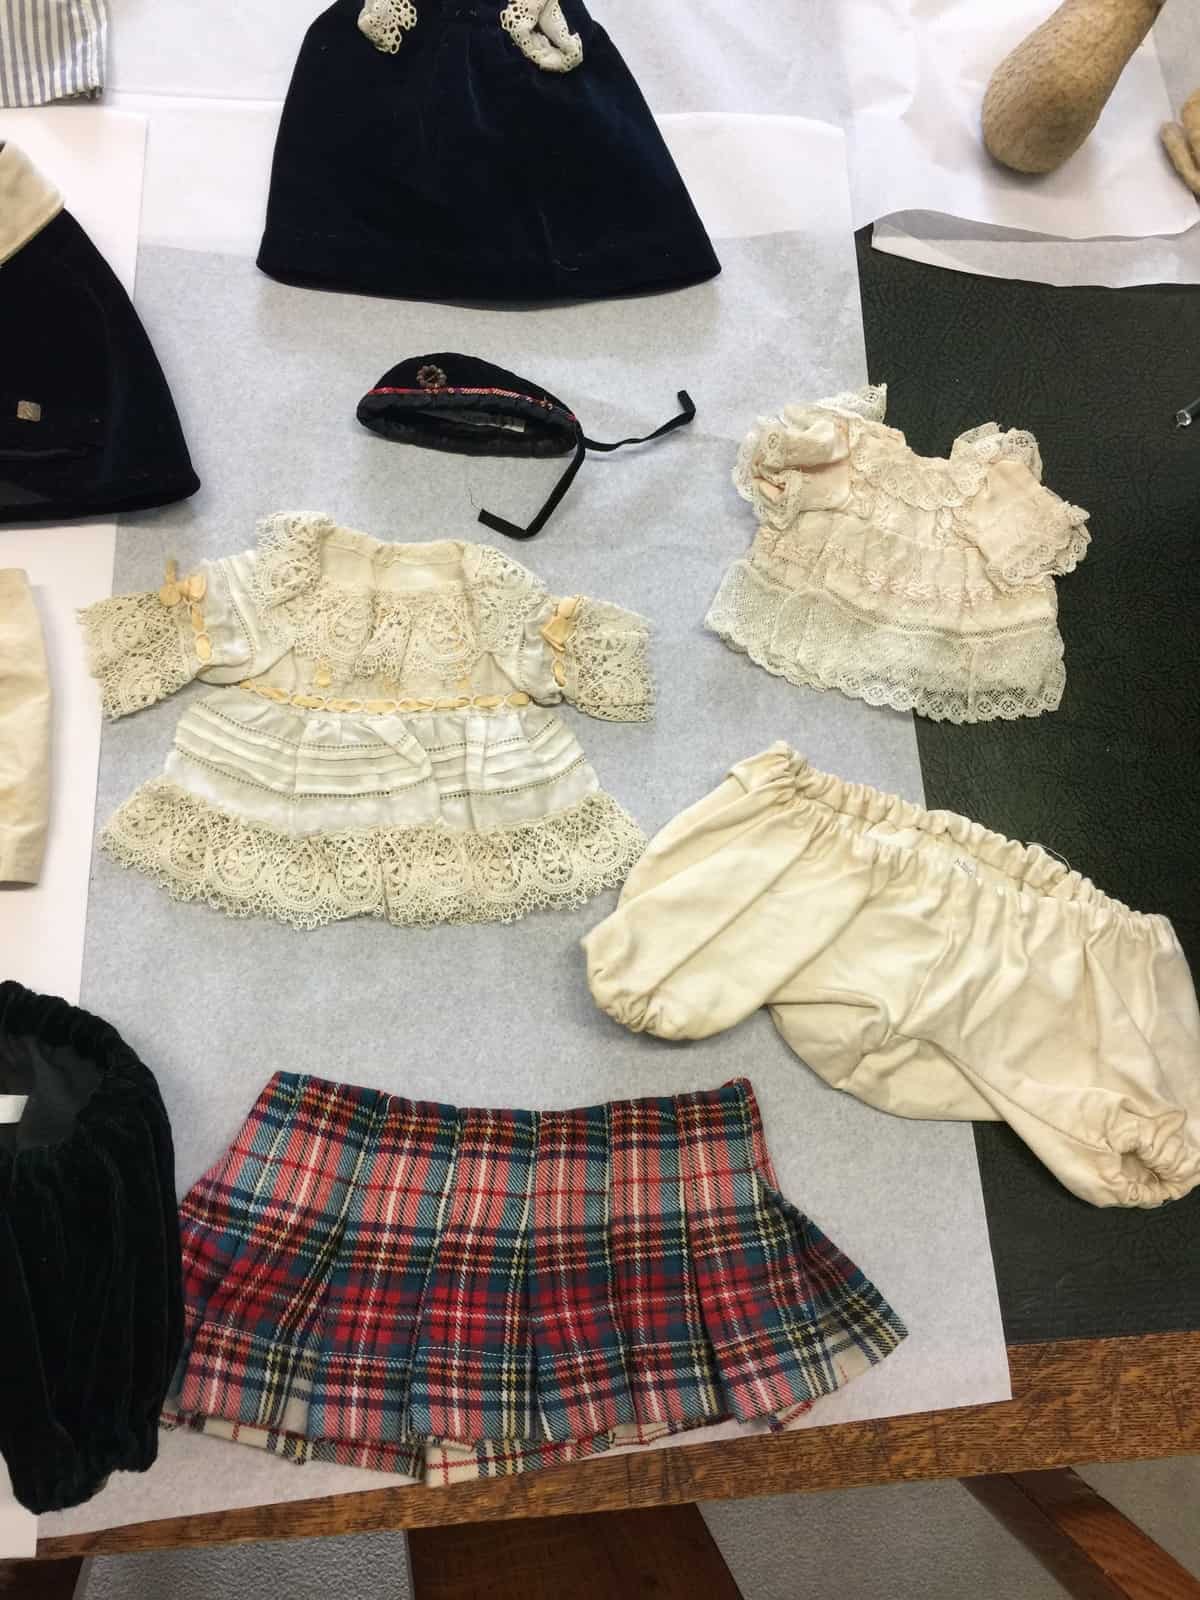 More of Pumpie's clothes